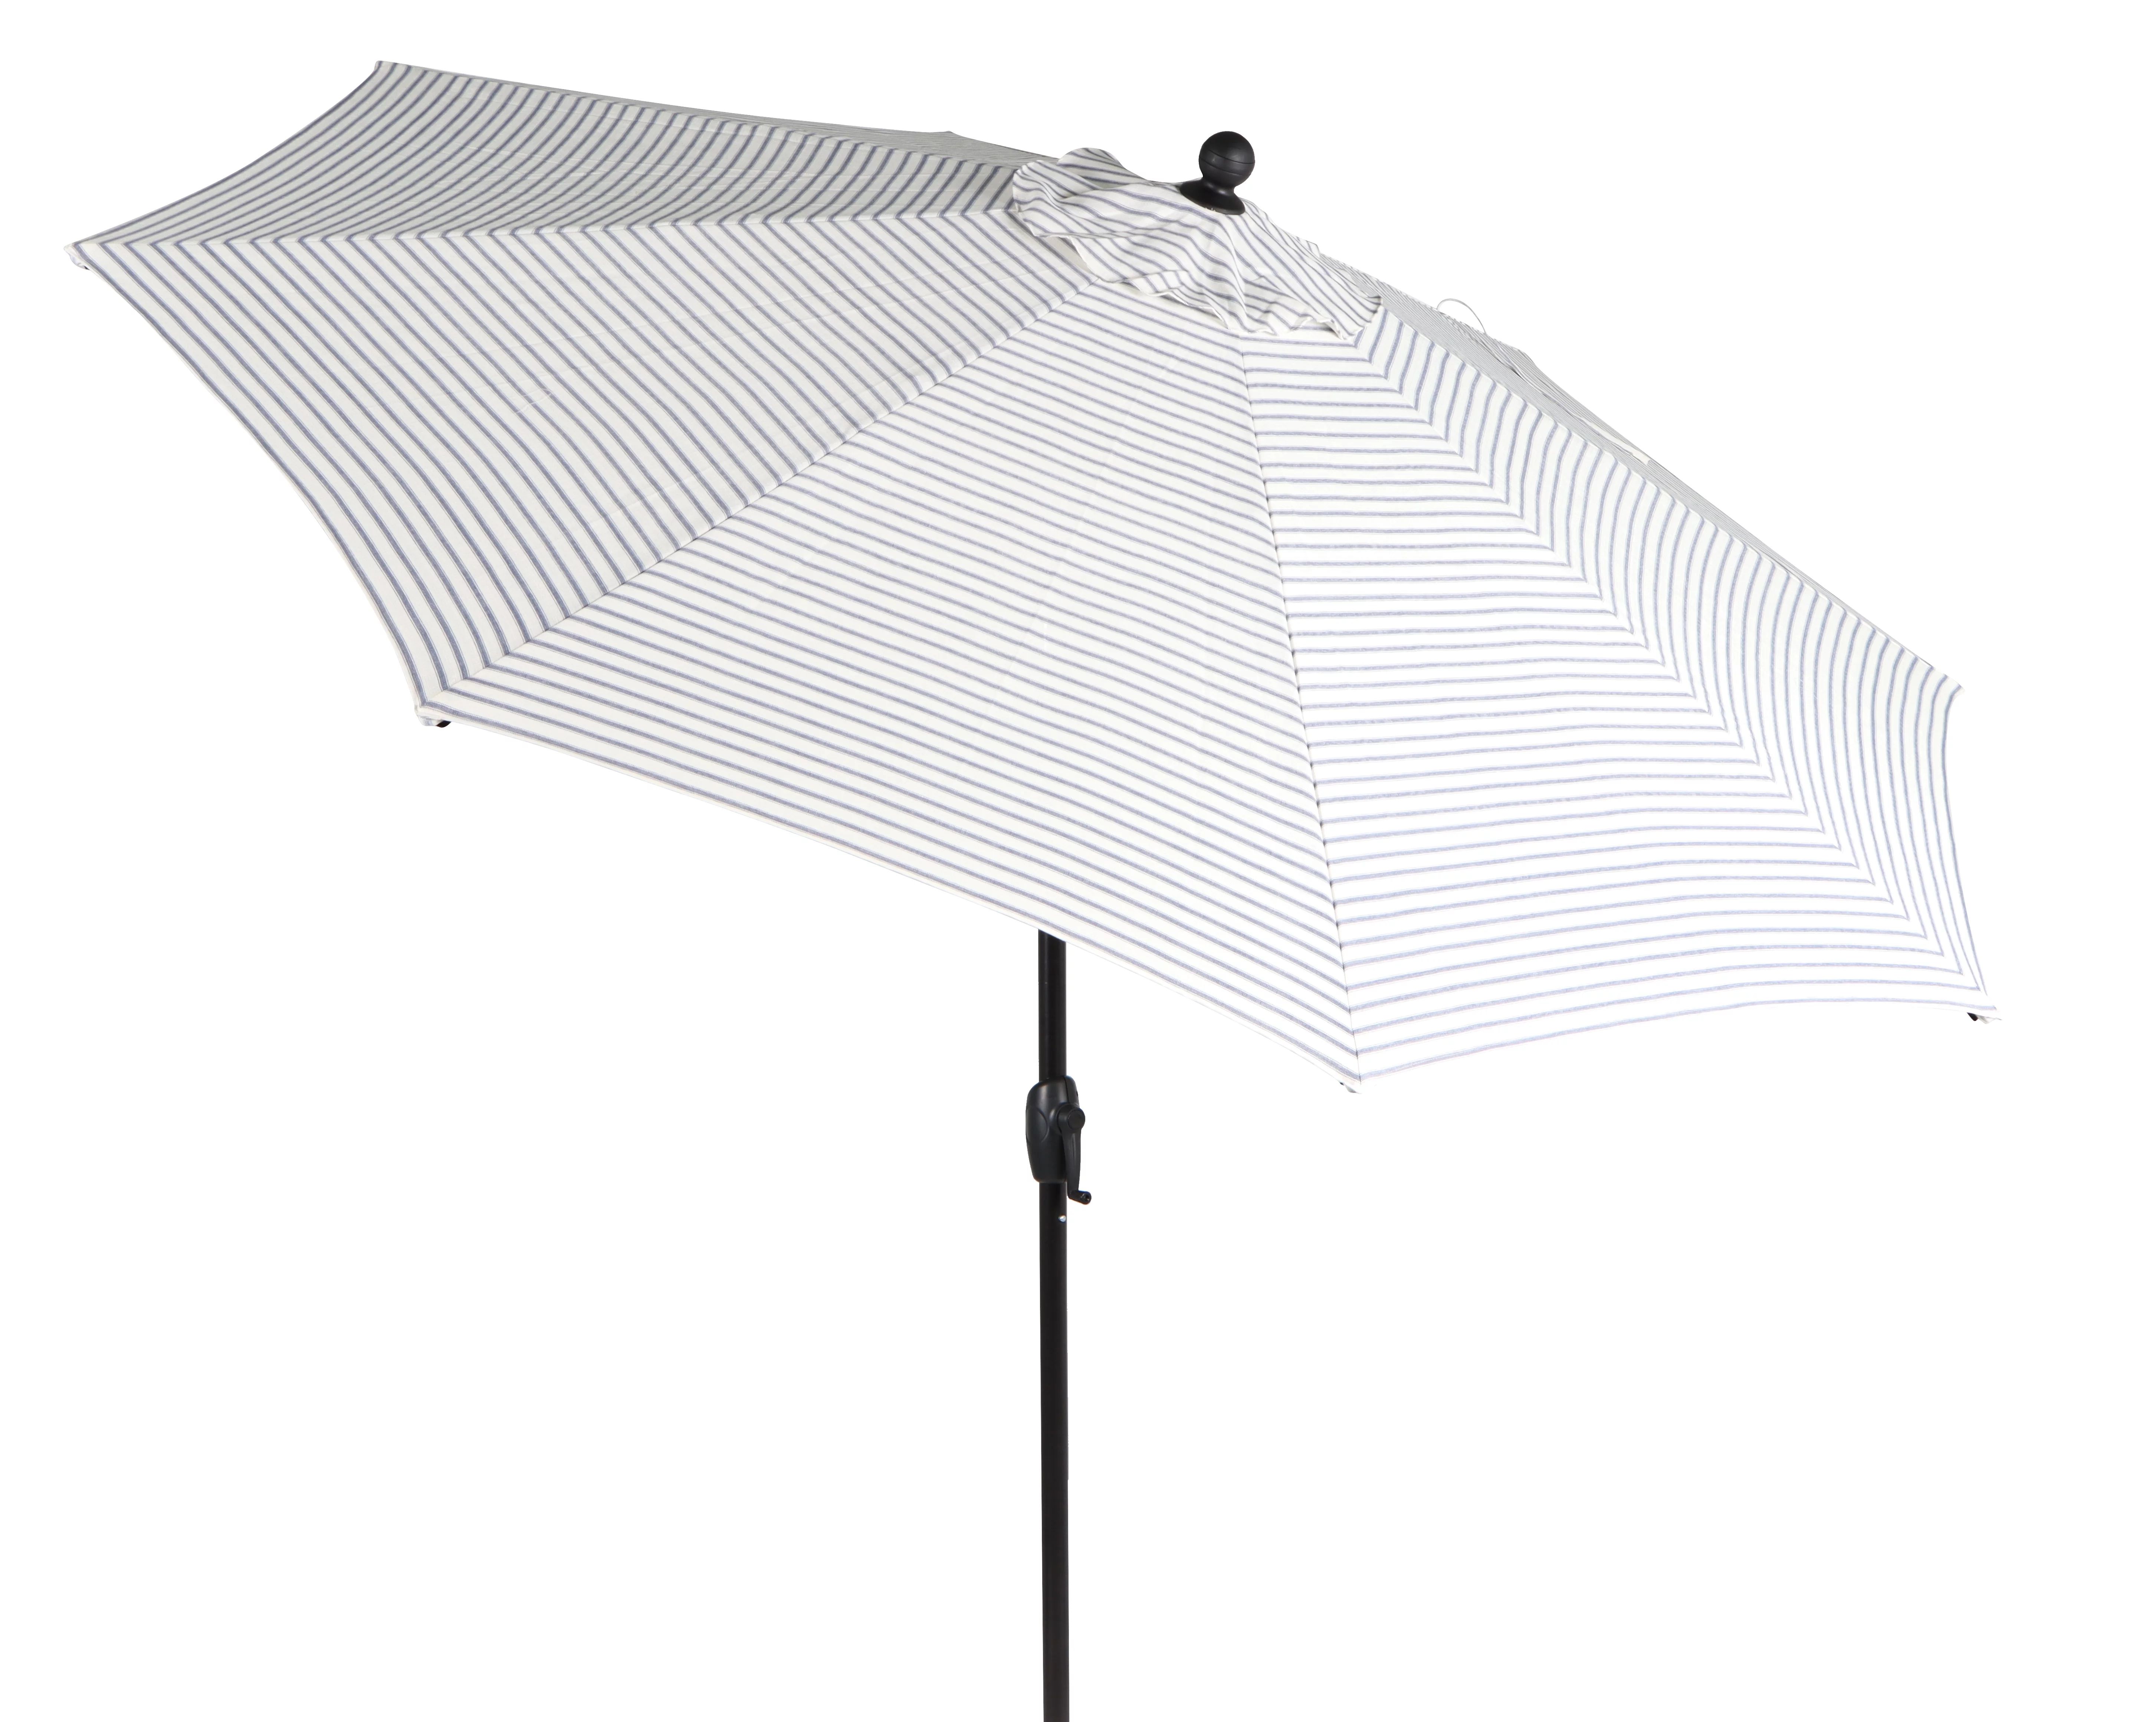 Better Homes & Gardens 9-foot Outdoor Market Patio Umbrella, White with Ticking Stripe | Walmart (US)